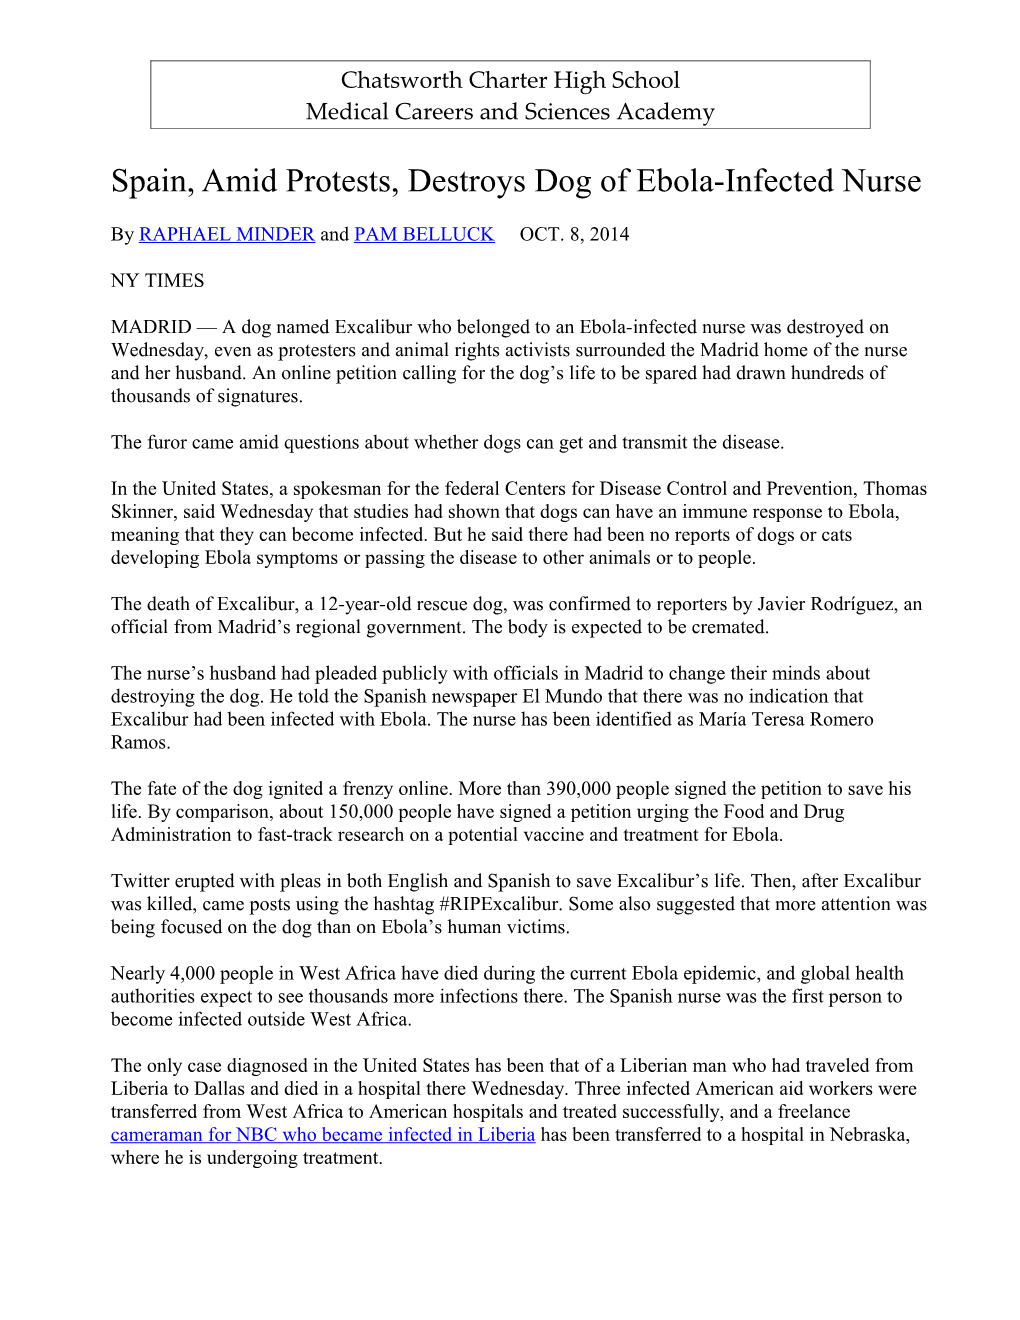 Spain, Amid Protests, Destroys Dog of Ebola-Infected Nurse